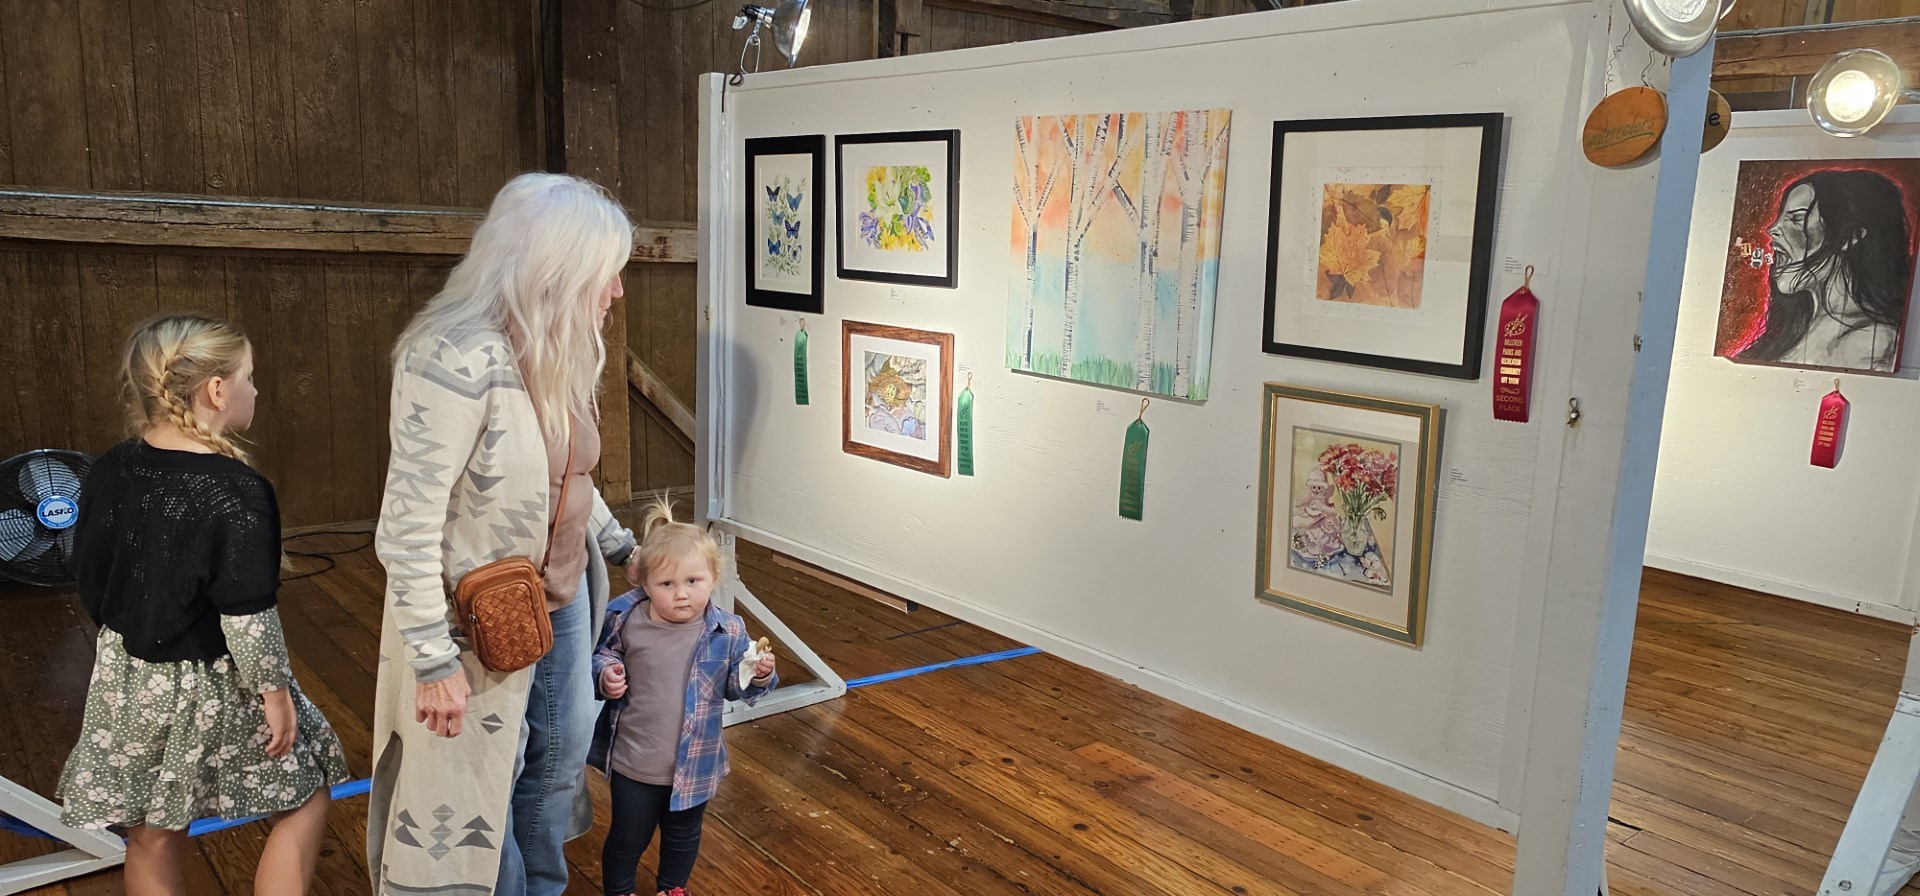 Millcreek Township Hosts Annual Art Show